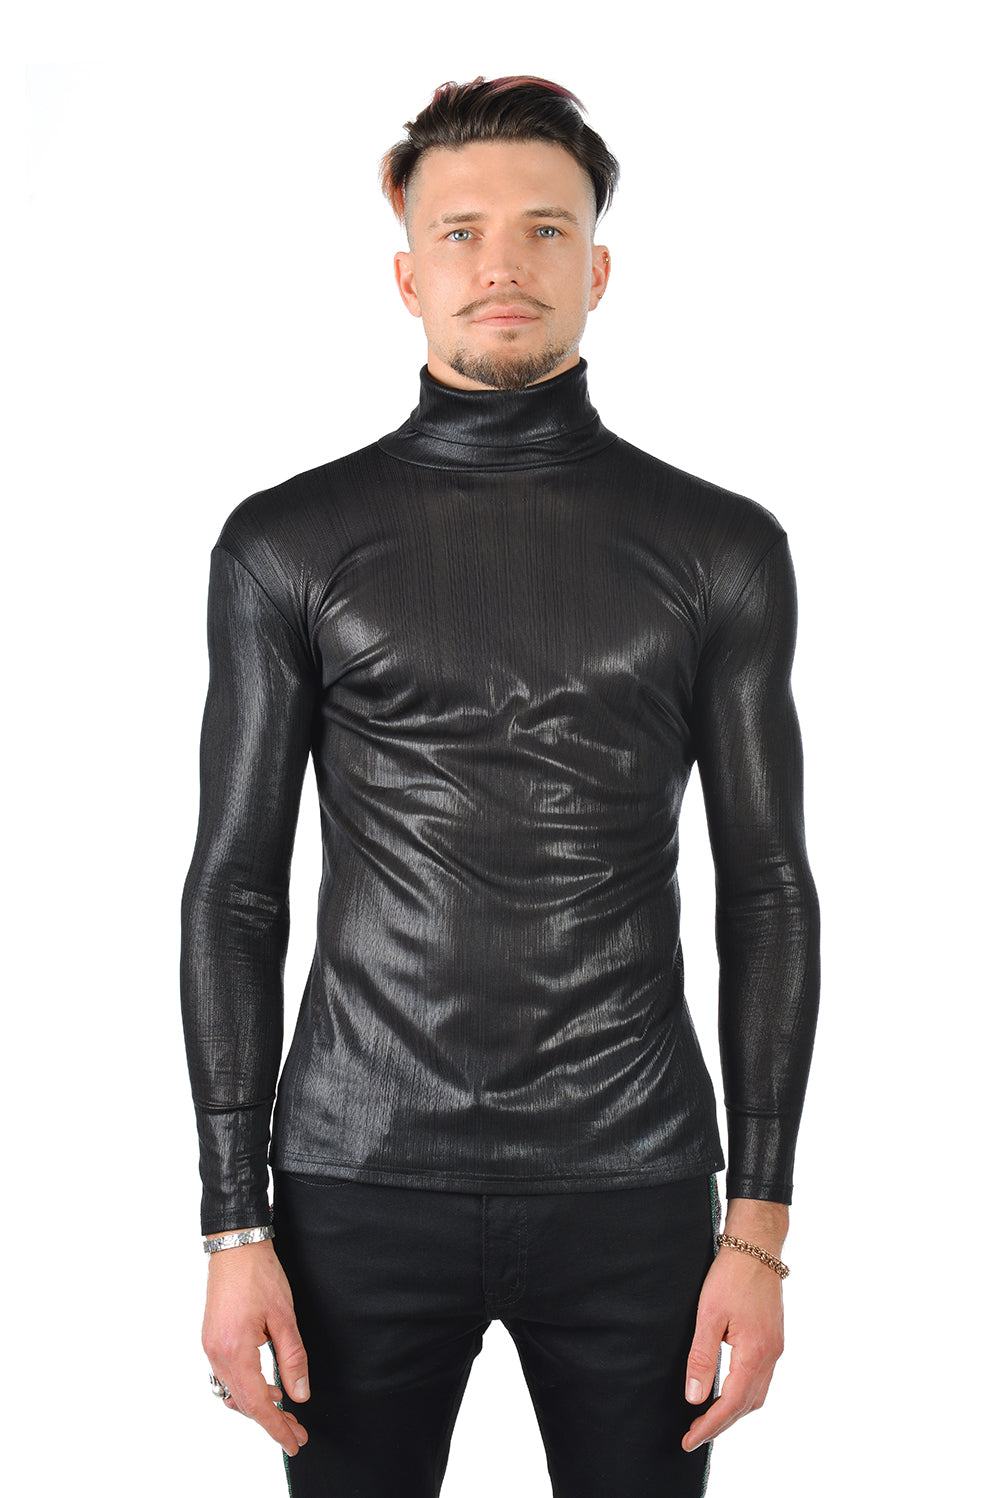 Barabas Men's Metallic Design Luxury Long Sleeve Shirt Sweater 2KT1000 Black